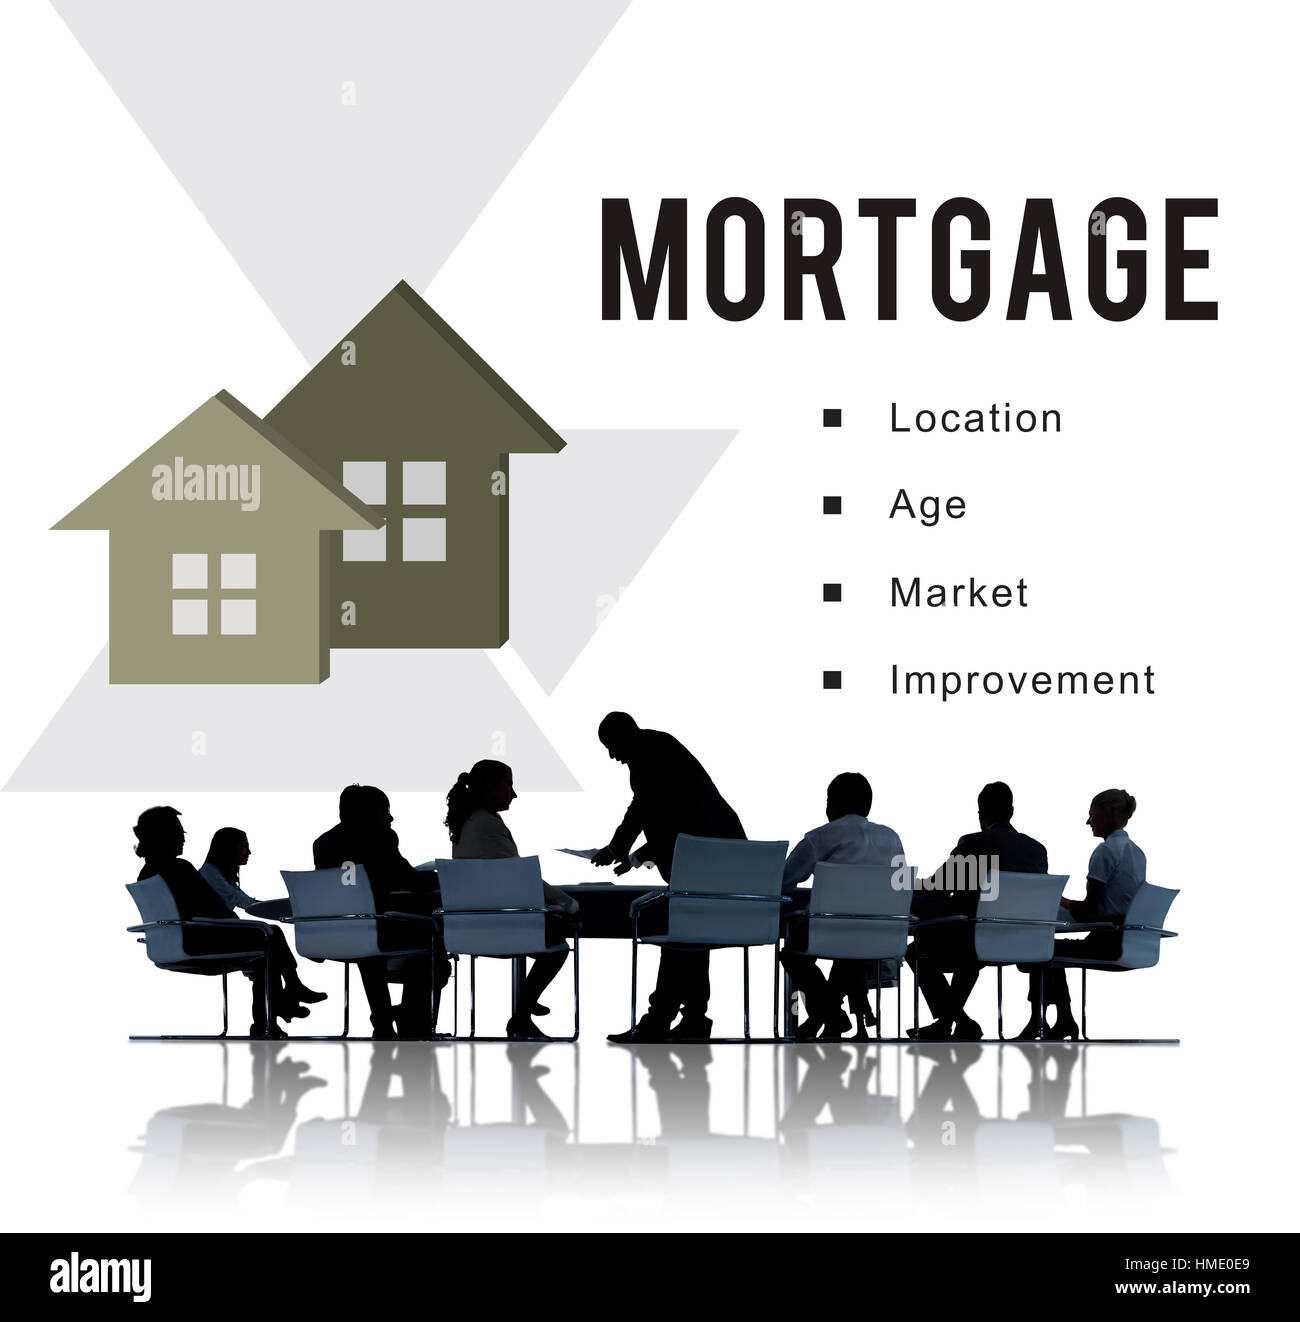 Real Estate Mortgage Loan Concept Stock Photo